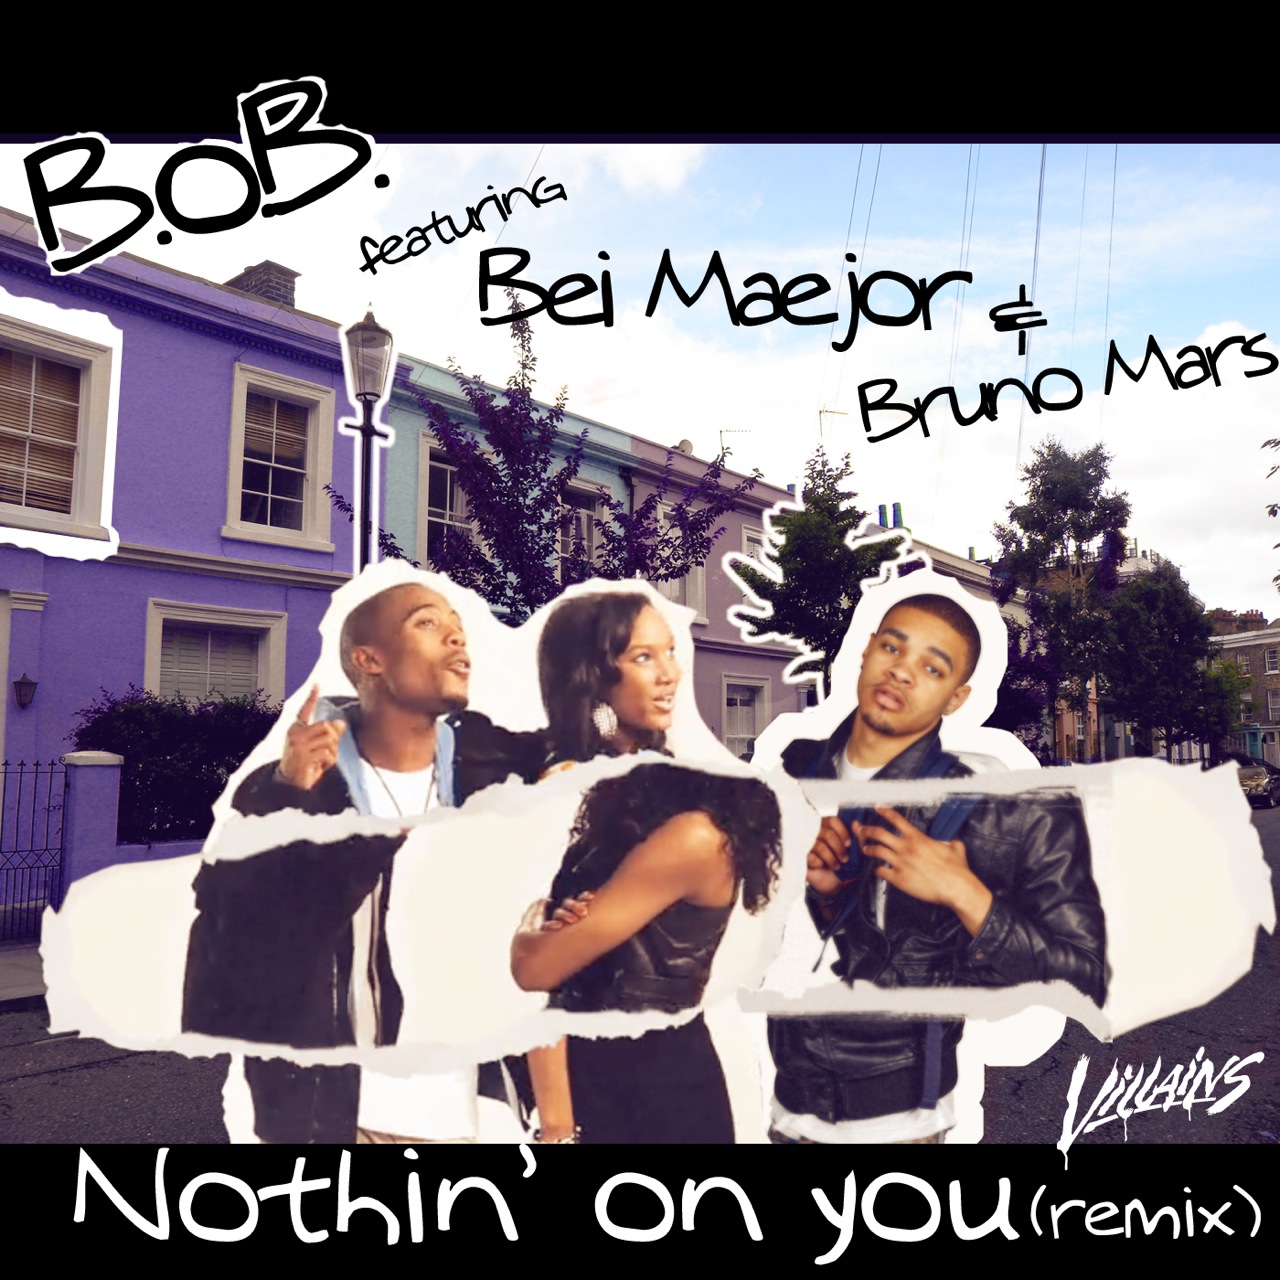 Песня b b s b. "Nothin' on you" b.o.b featuring Bruno Mars. Nothing on you. Bei Maejor картинки альбомов.